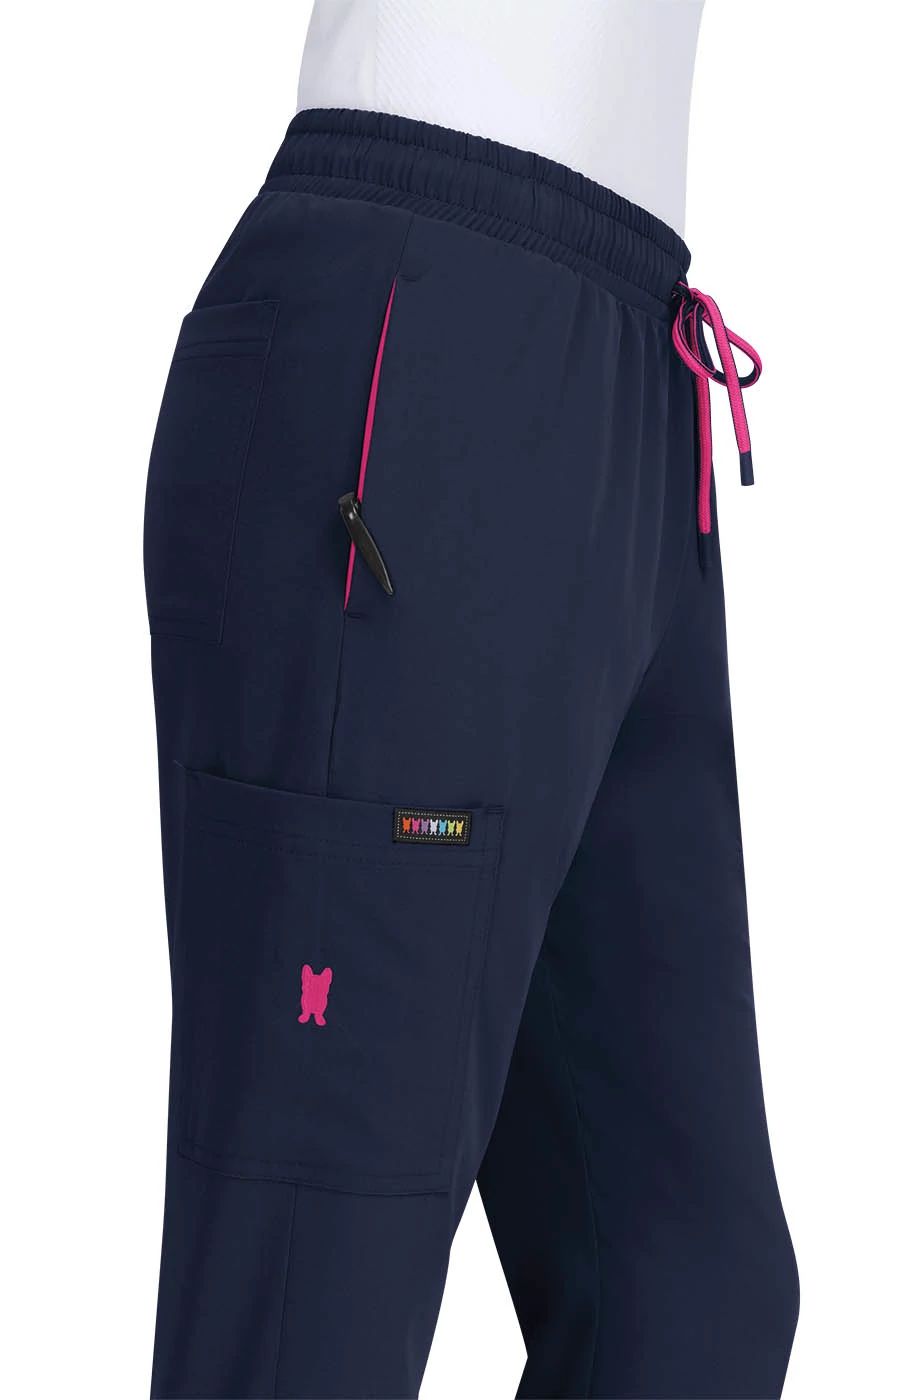 koi-shanelle-5-pocket-jogger-scrub-pants-navy-blue